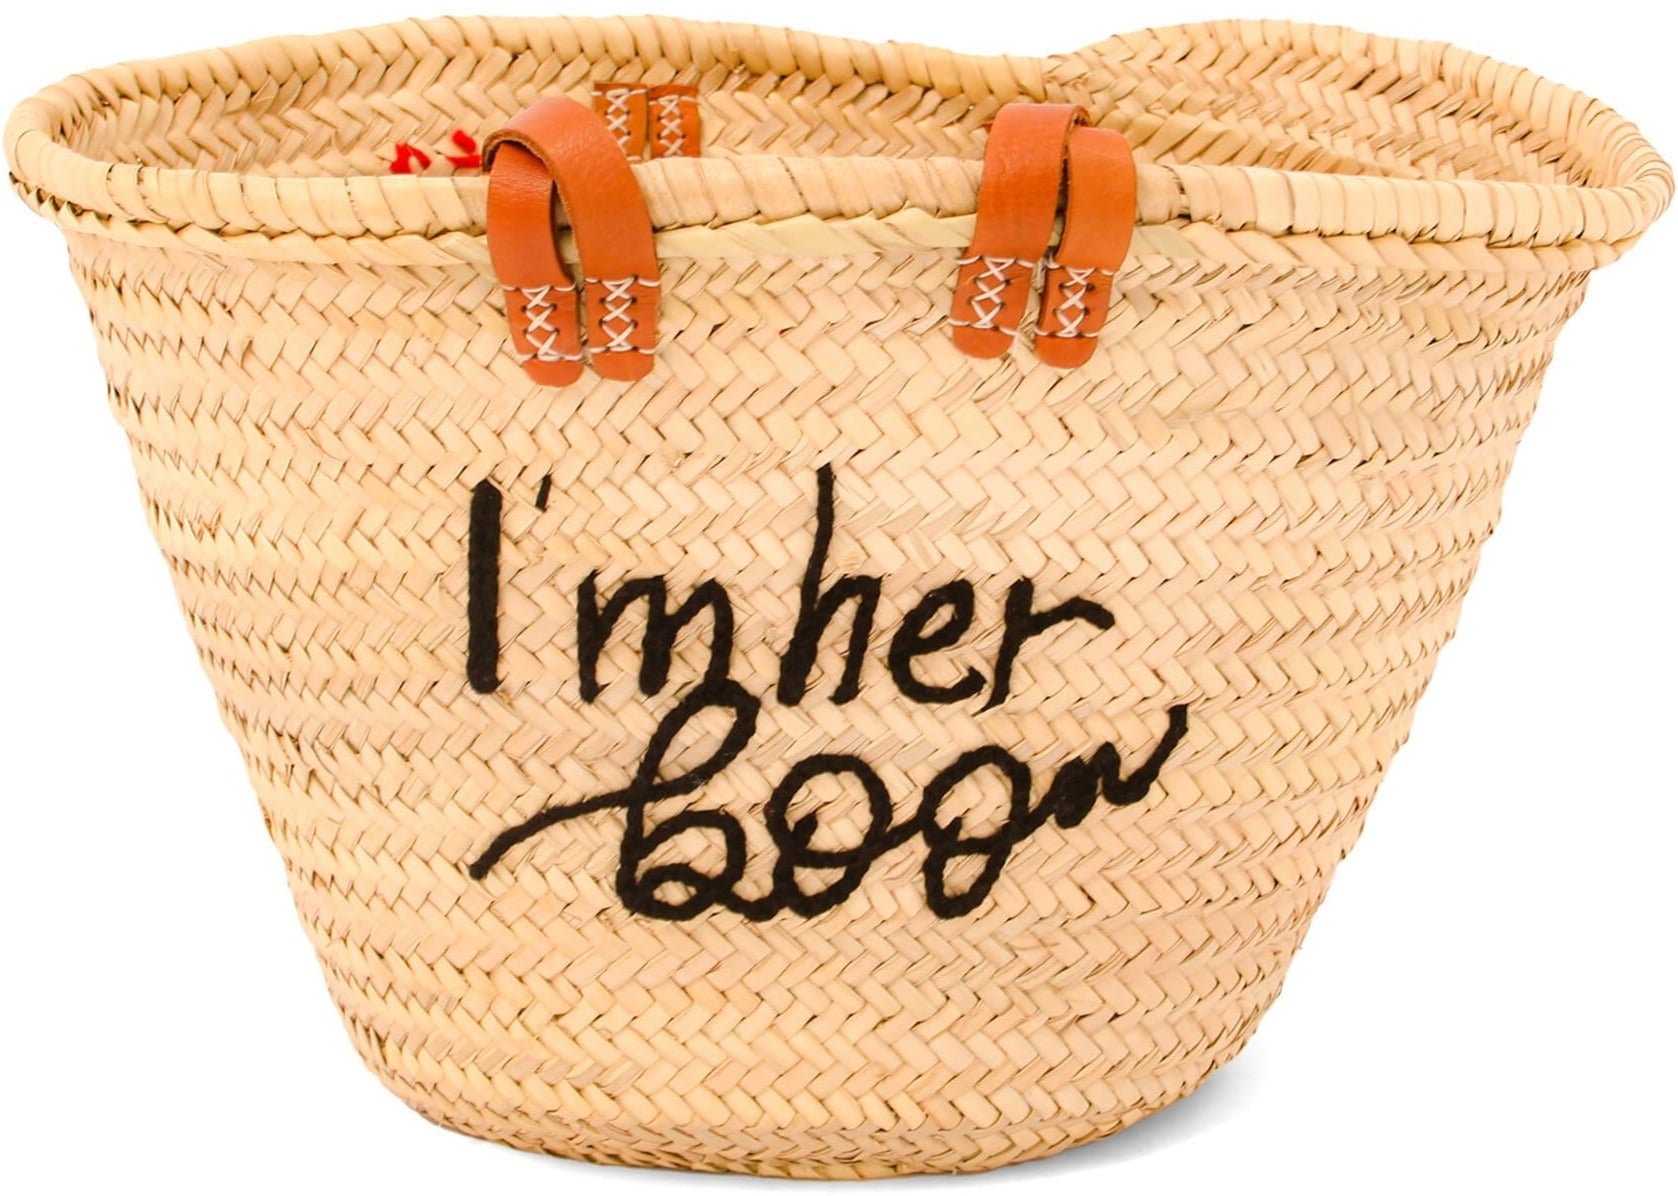 Personalized Halloween Handmade Basket